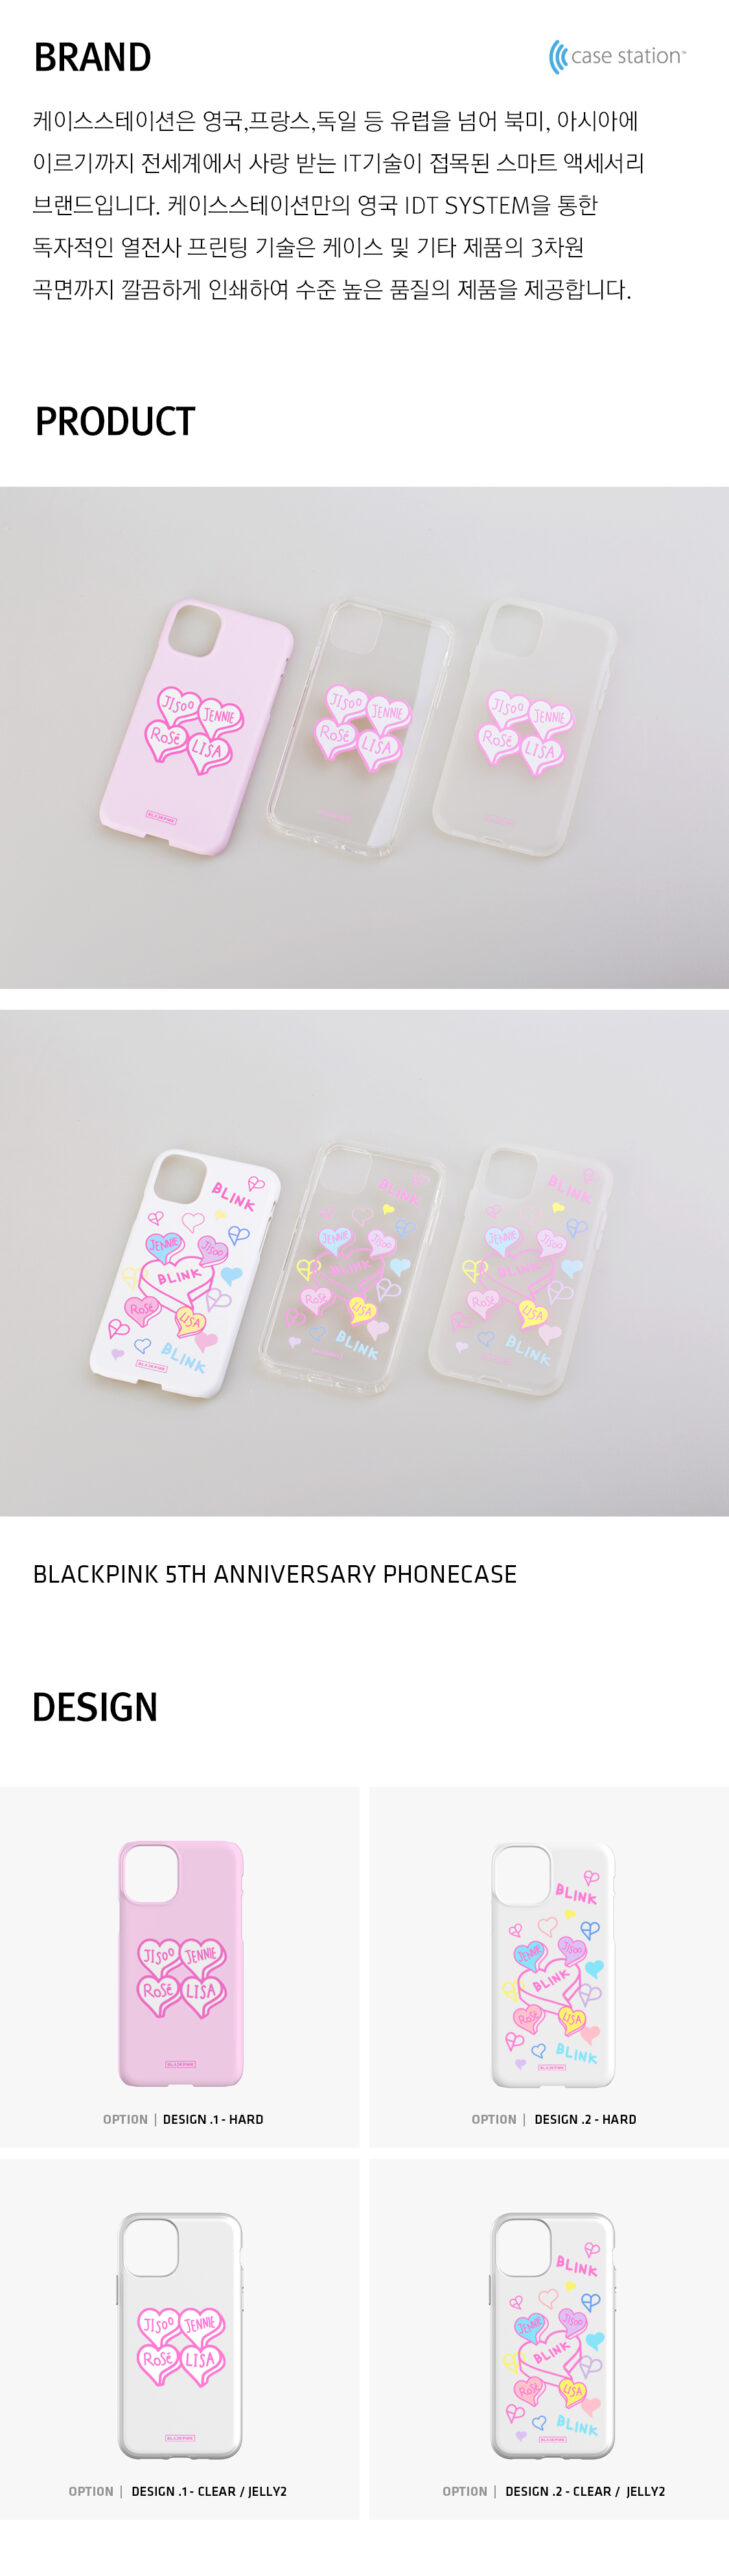 black pink phone case